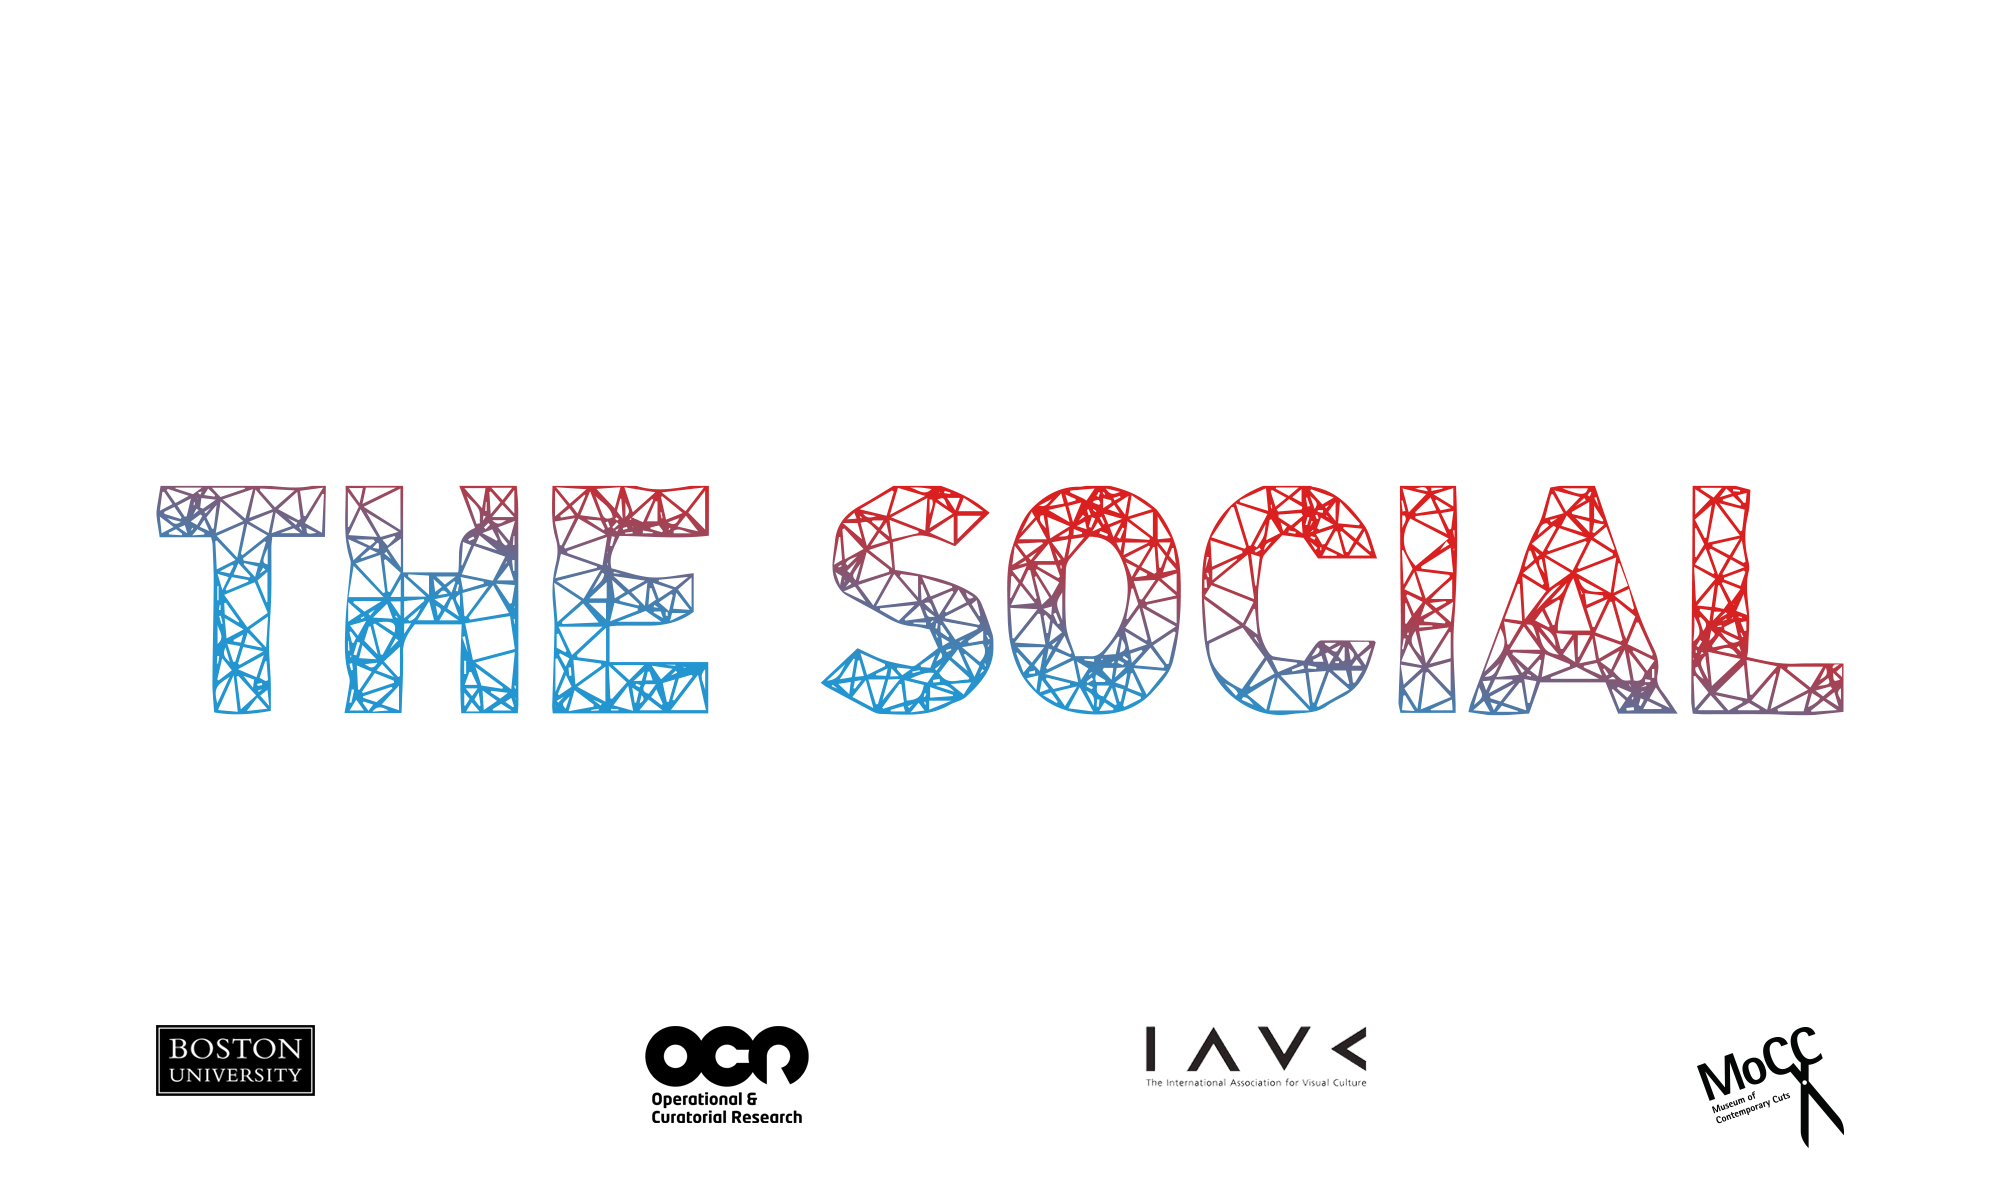 THE SOCIAL